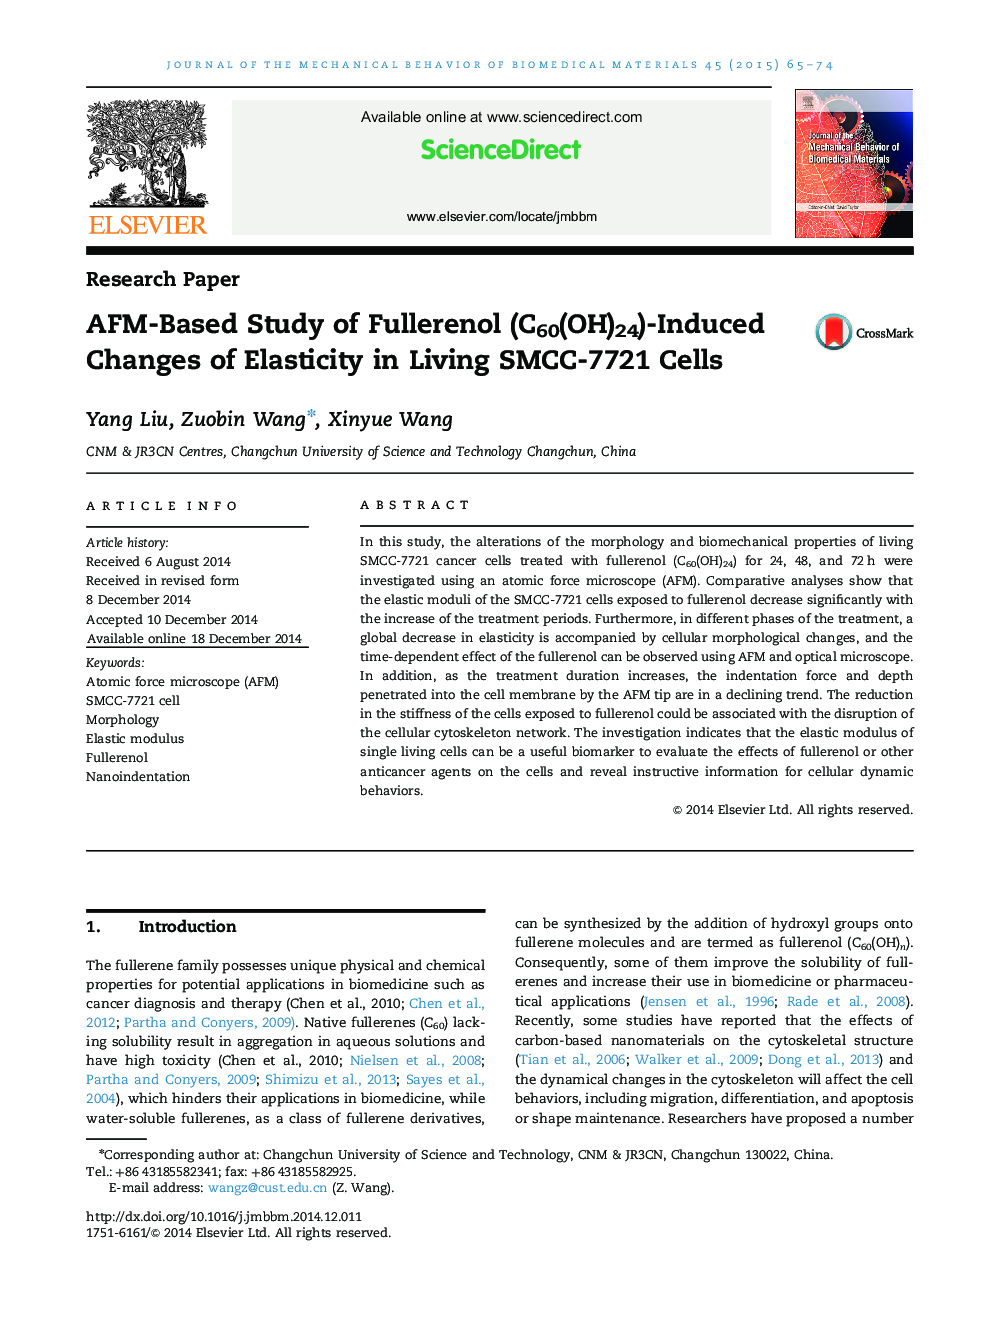 AFM-Based Study of Fullerenol (C60(OH)24)-Induced Changes of Elasticity in Living SMCC-7721 Cells